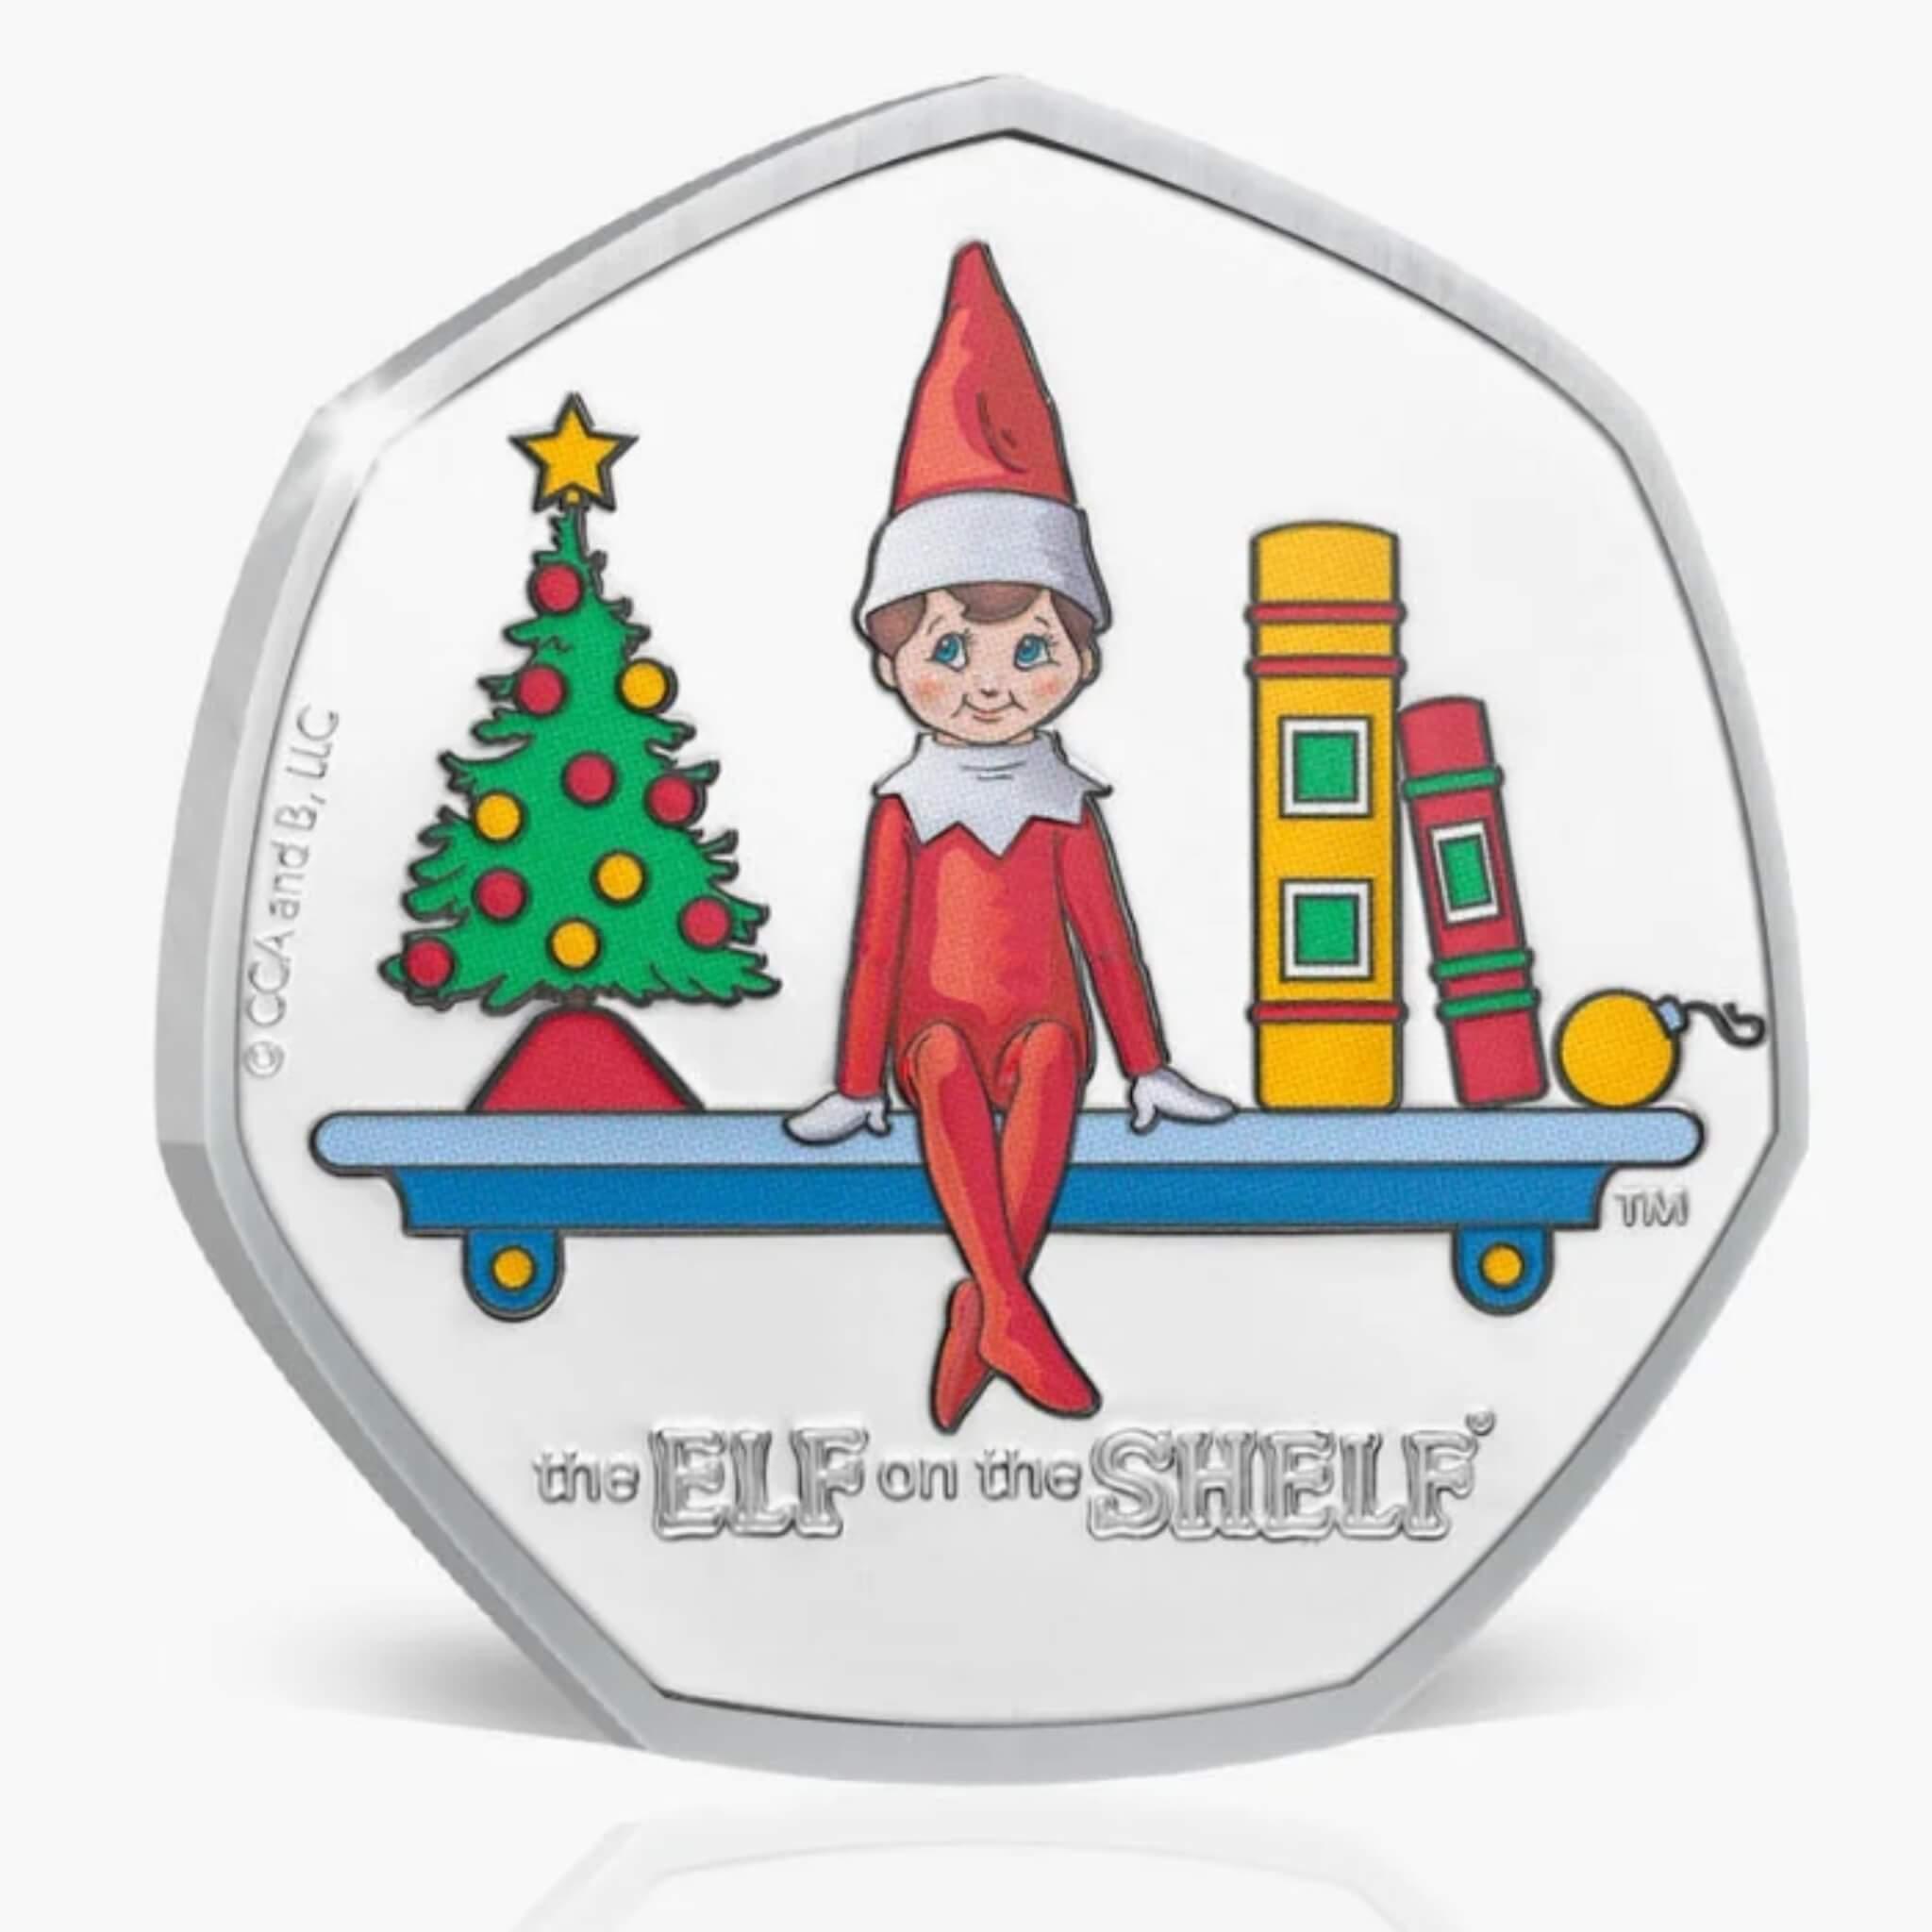 Elf on the Shelf BU 50p Coloured Coin in Christmas Card Coin (LIMITED EDITION) - The Elf on The Shelf